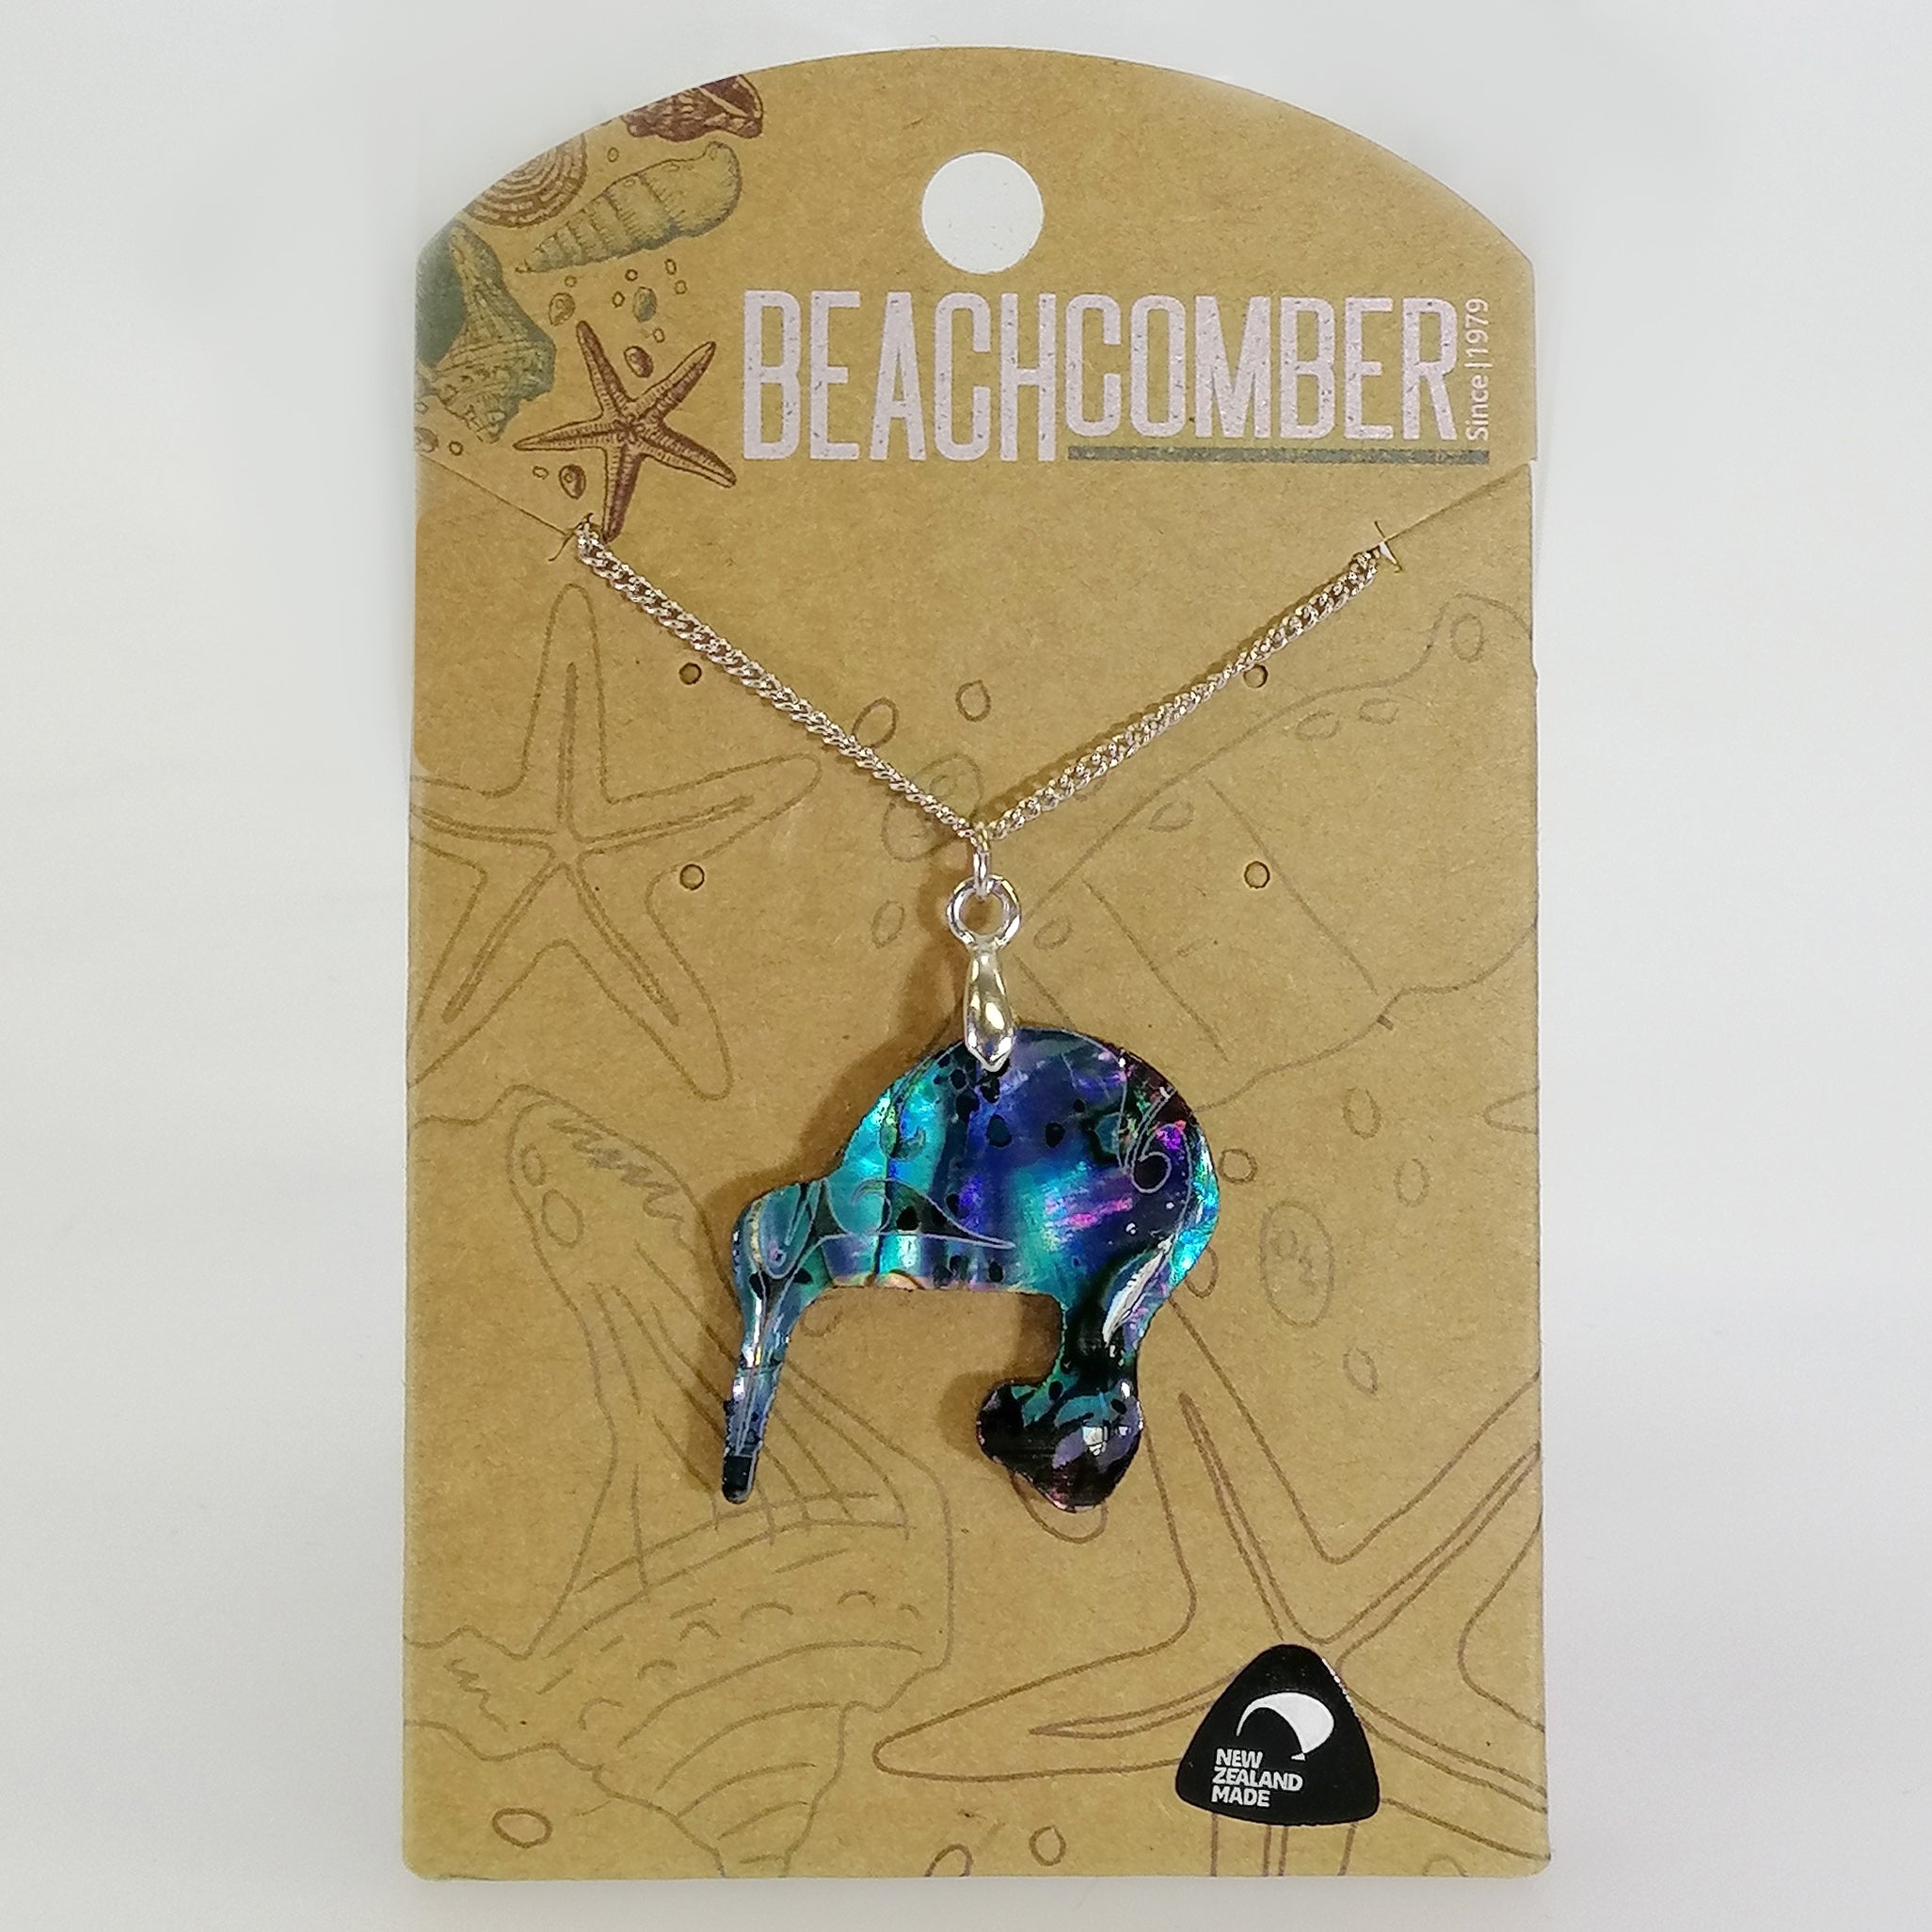 Beachcomber - Paua Kiwi Necklace